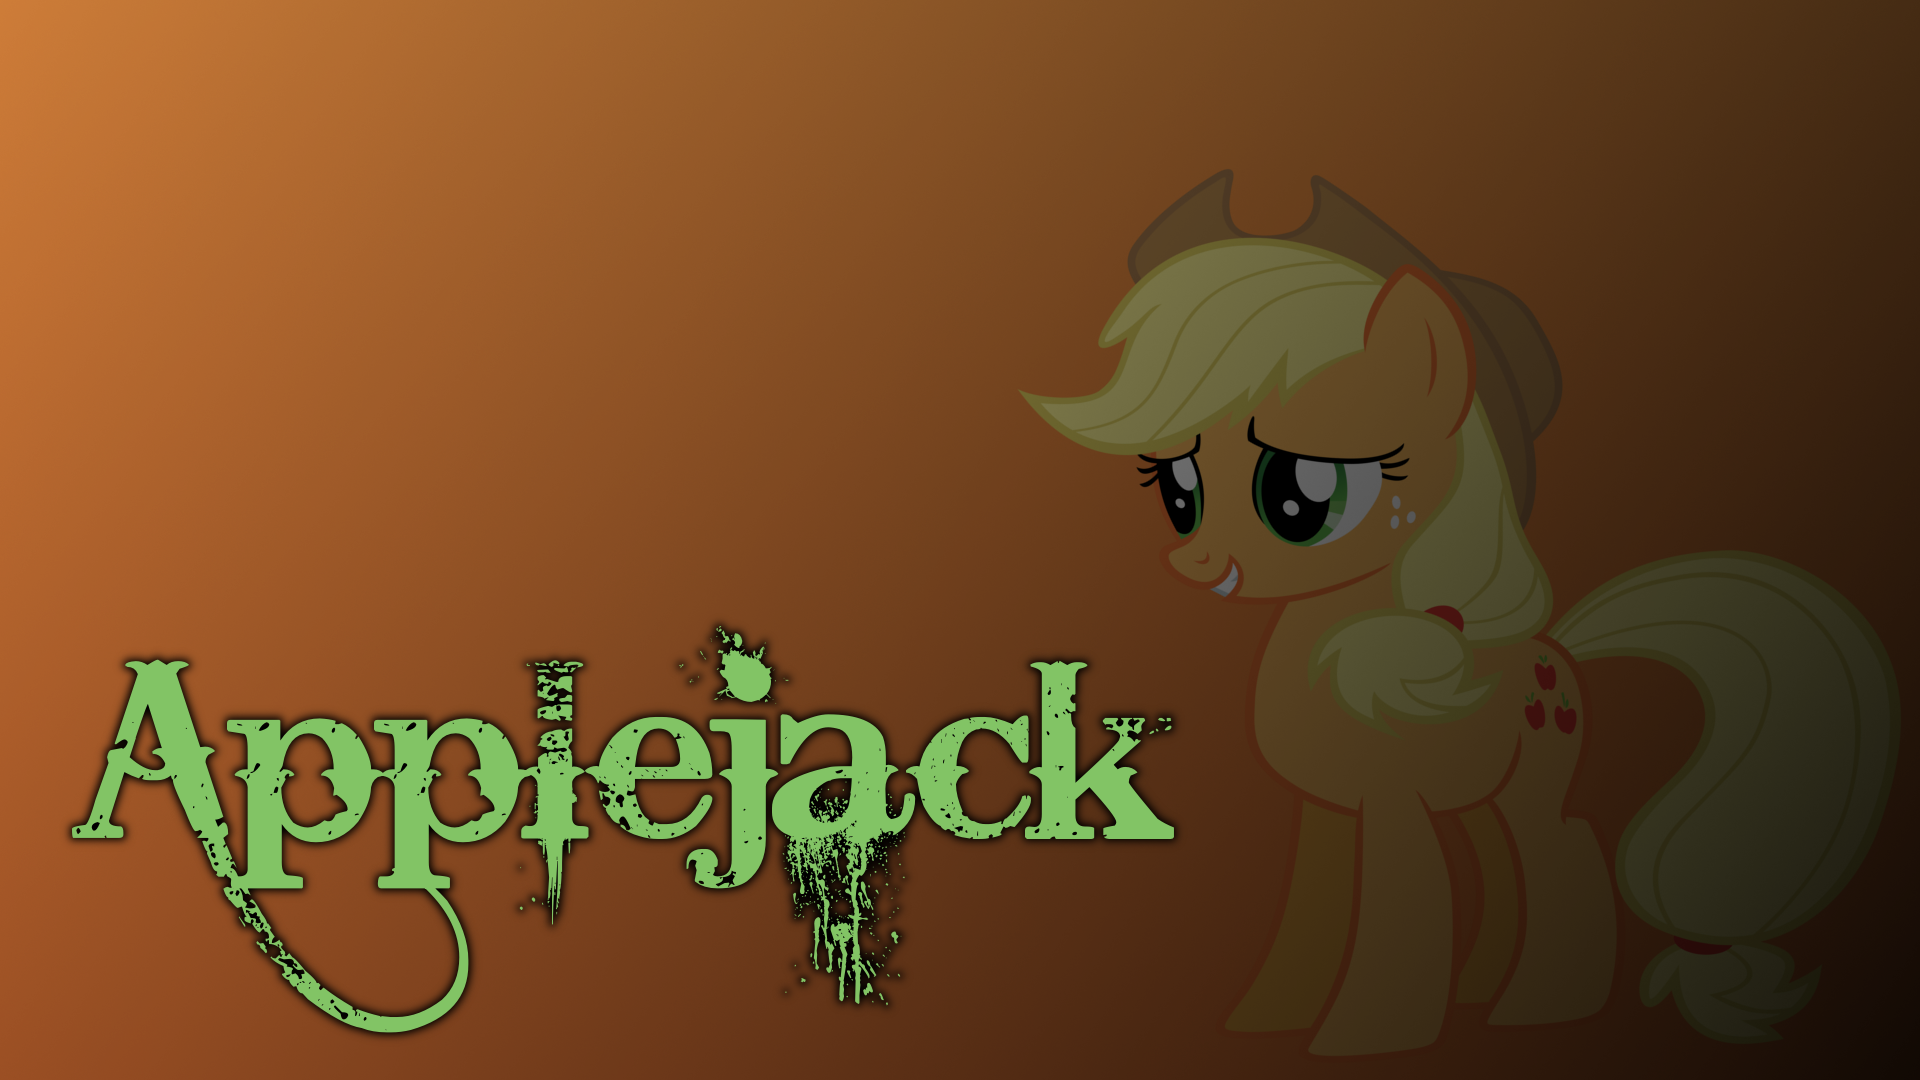 Applejack Wallpaper by Bronyvectors and NightmareAsia